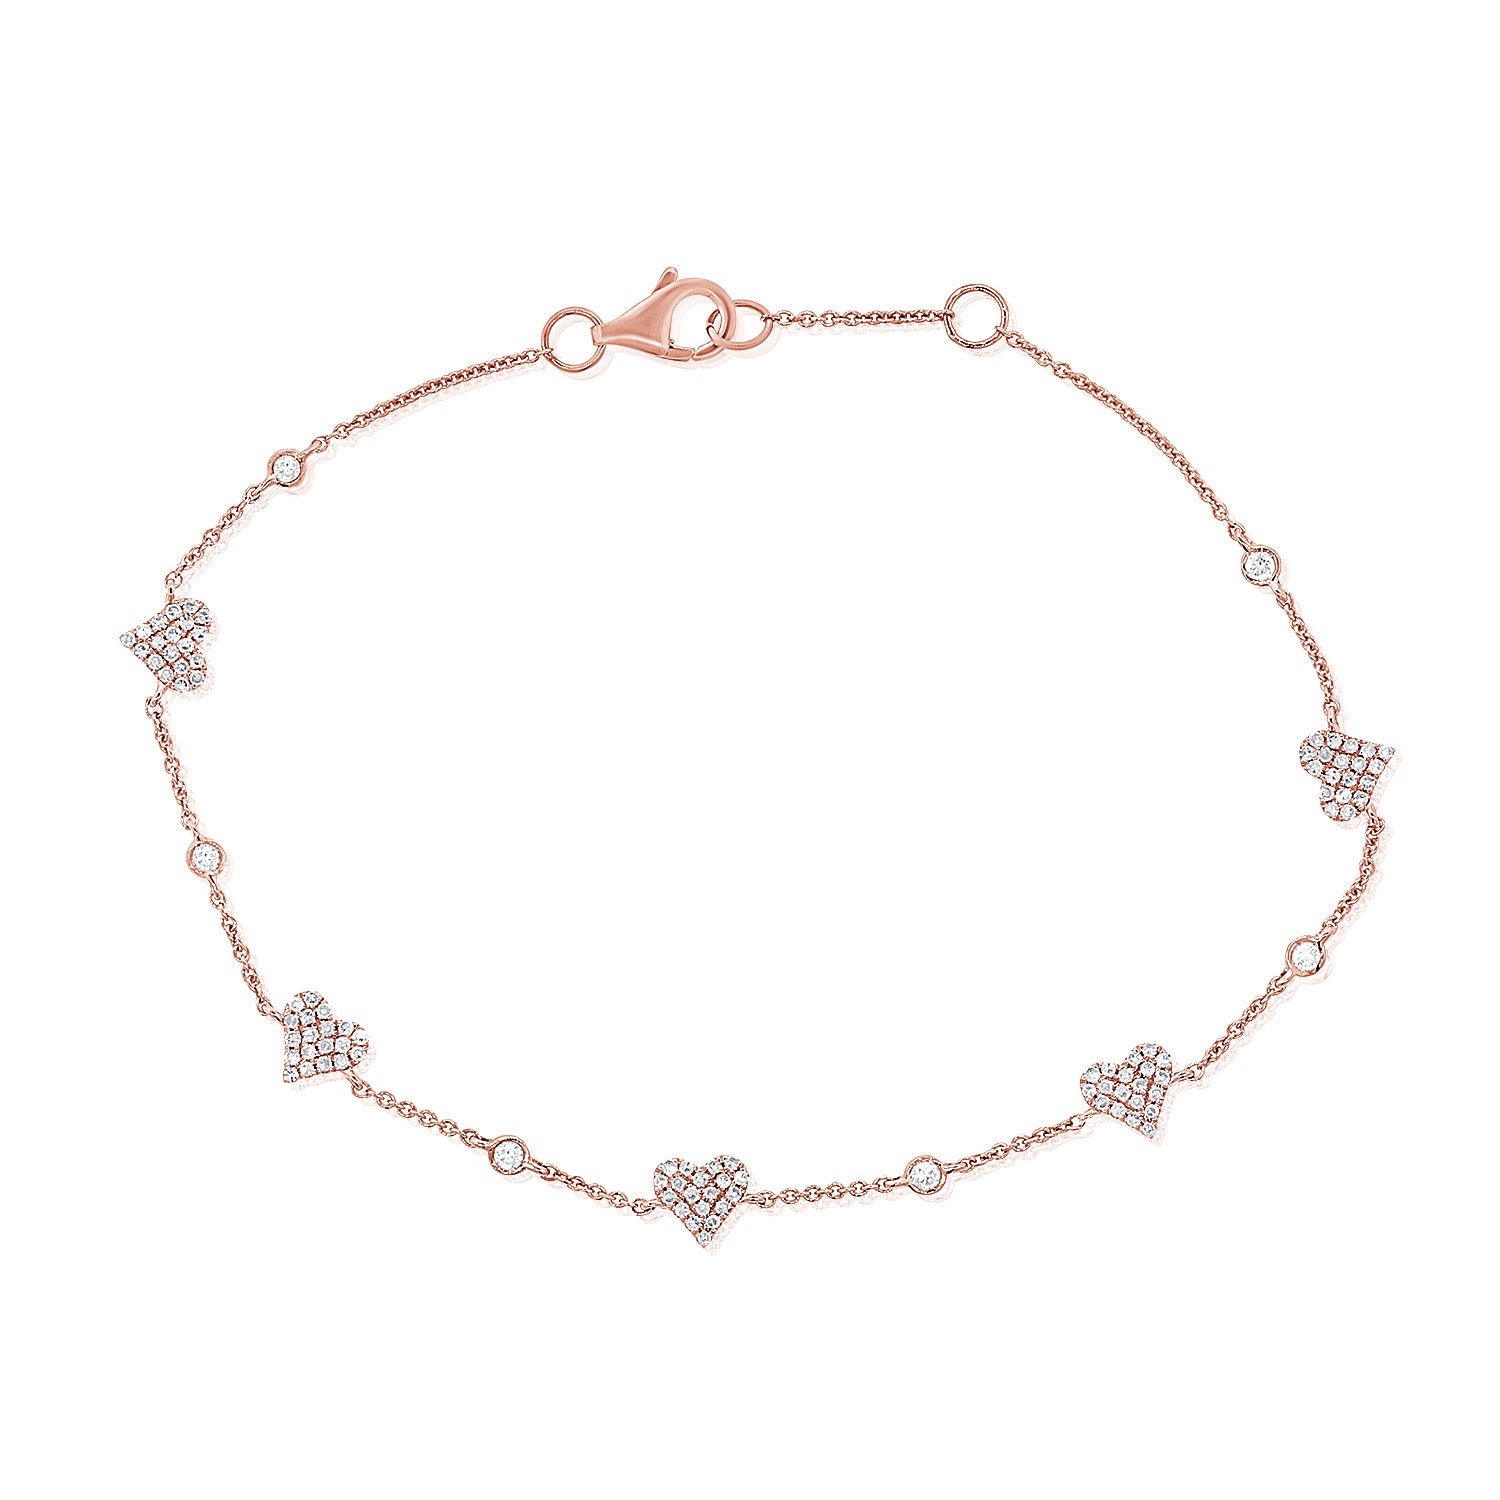 14k Gold & Diamond Red String Bracelet – Sabrina Design